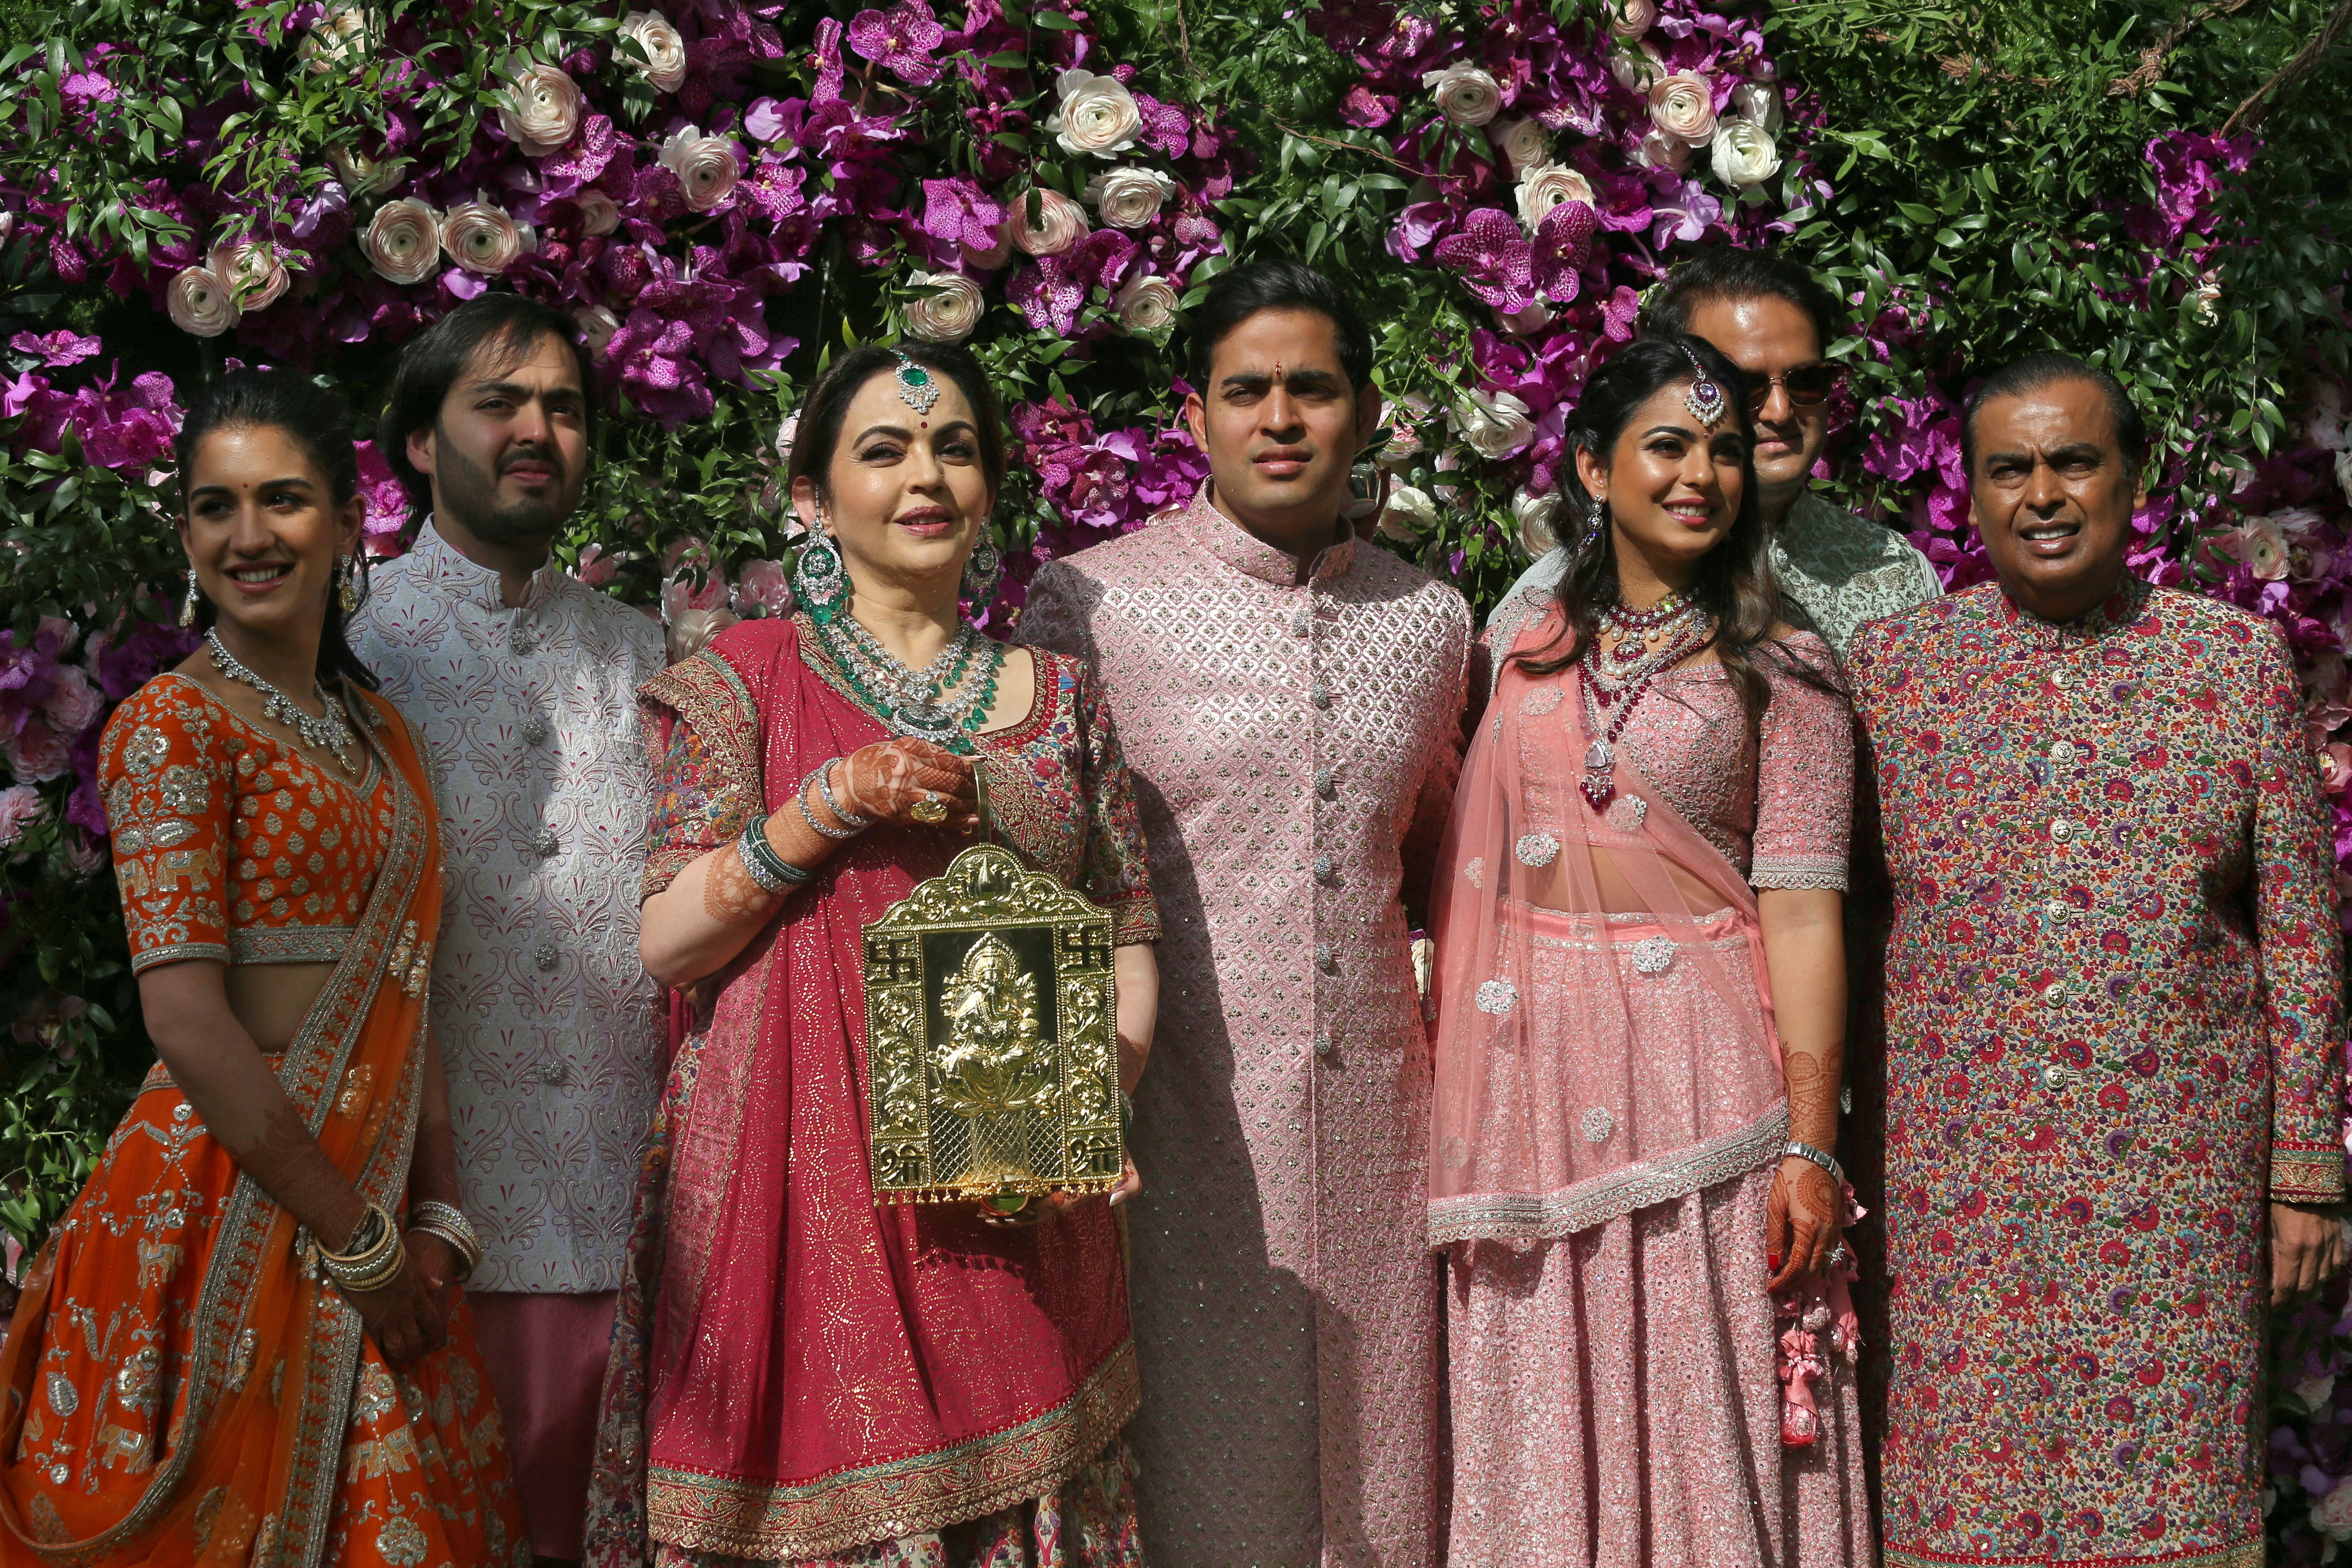 Radhika Merchant, Anant Ambani, Nita Ambani, Akash Ambani, Isha Piramal, Anand Piramal and Mukesh Ambani, the Chairman of Reliance Industries, pose at the wedding ceremony of Akash, at Bandra-Kurla Complex in Mumbai